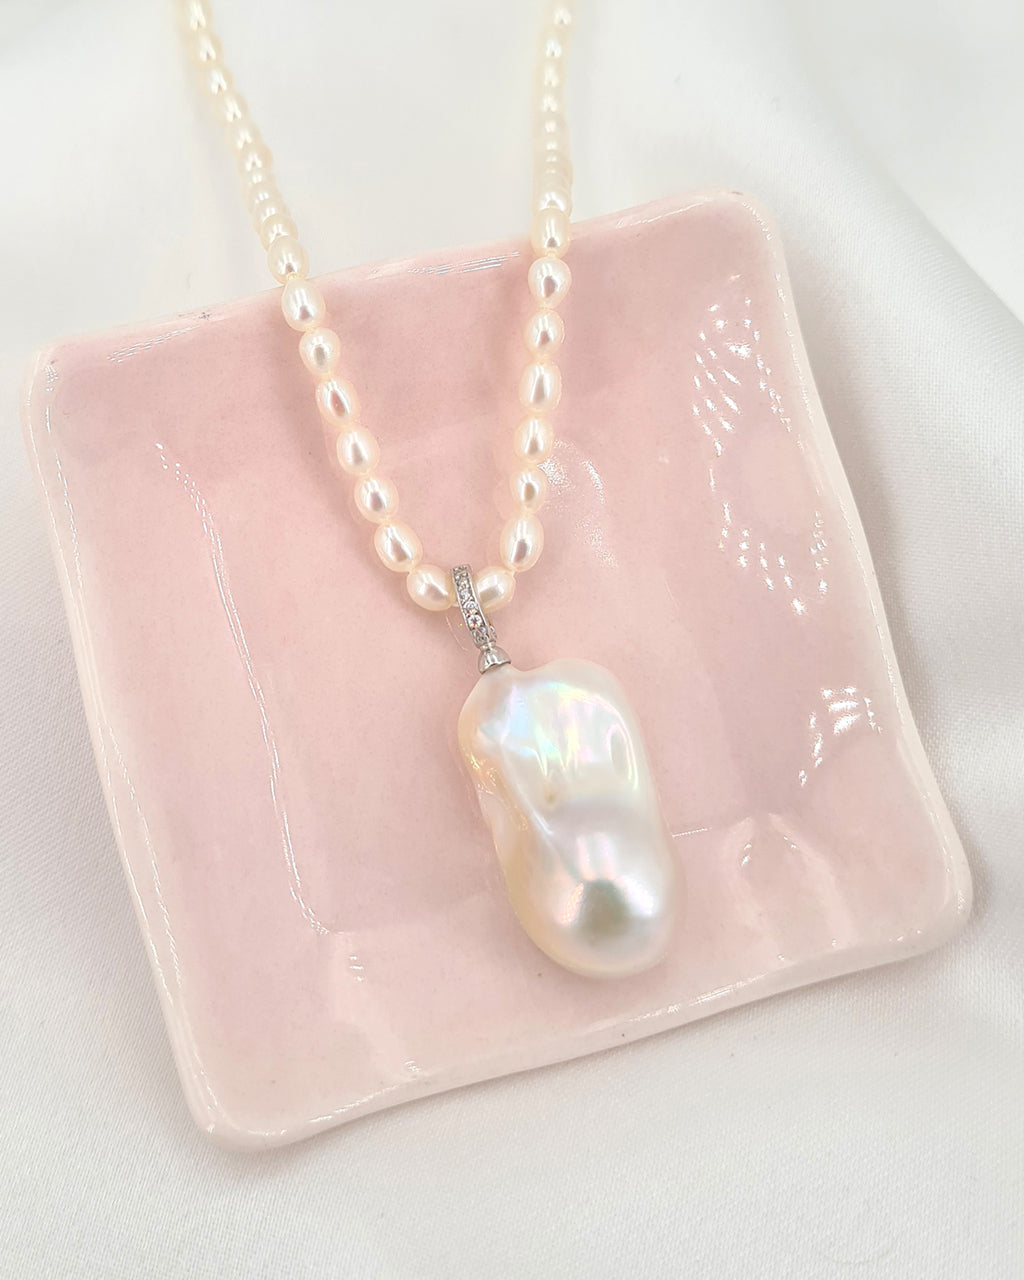 Large White Baroque Pearl Necklace - Detachable Clasp | Elegant Bridal Jewelry | Singapore